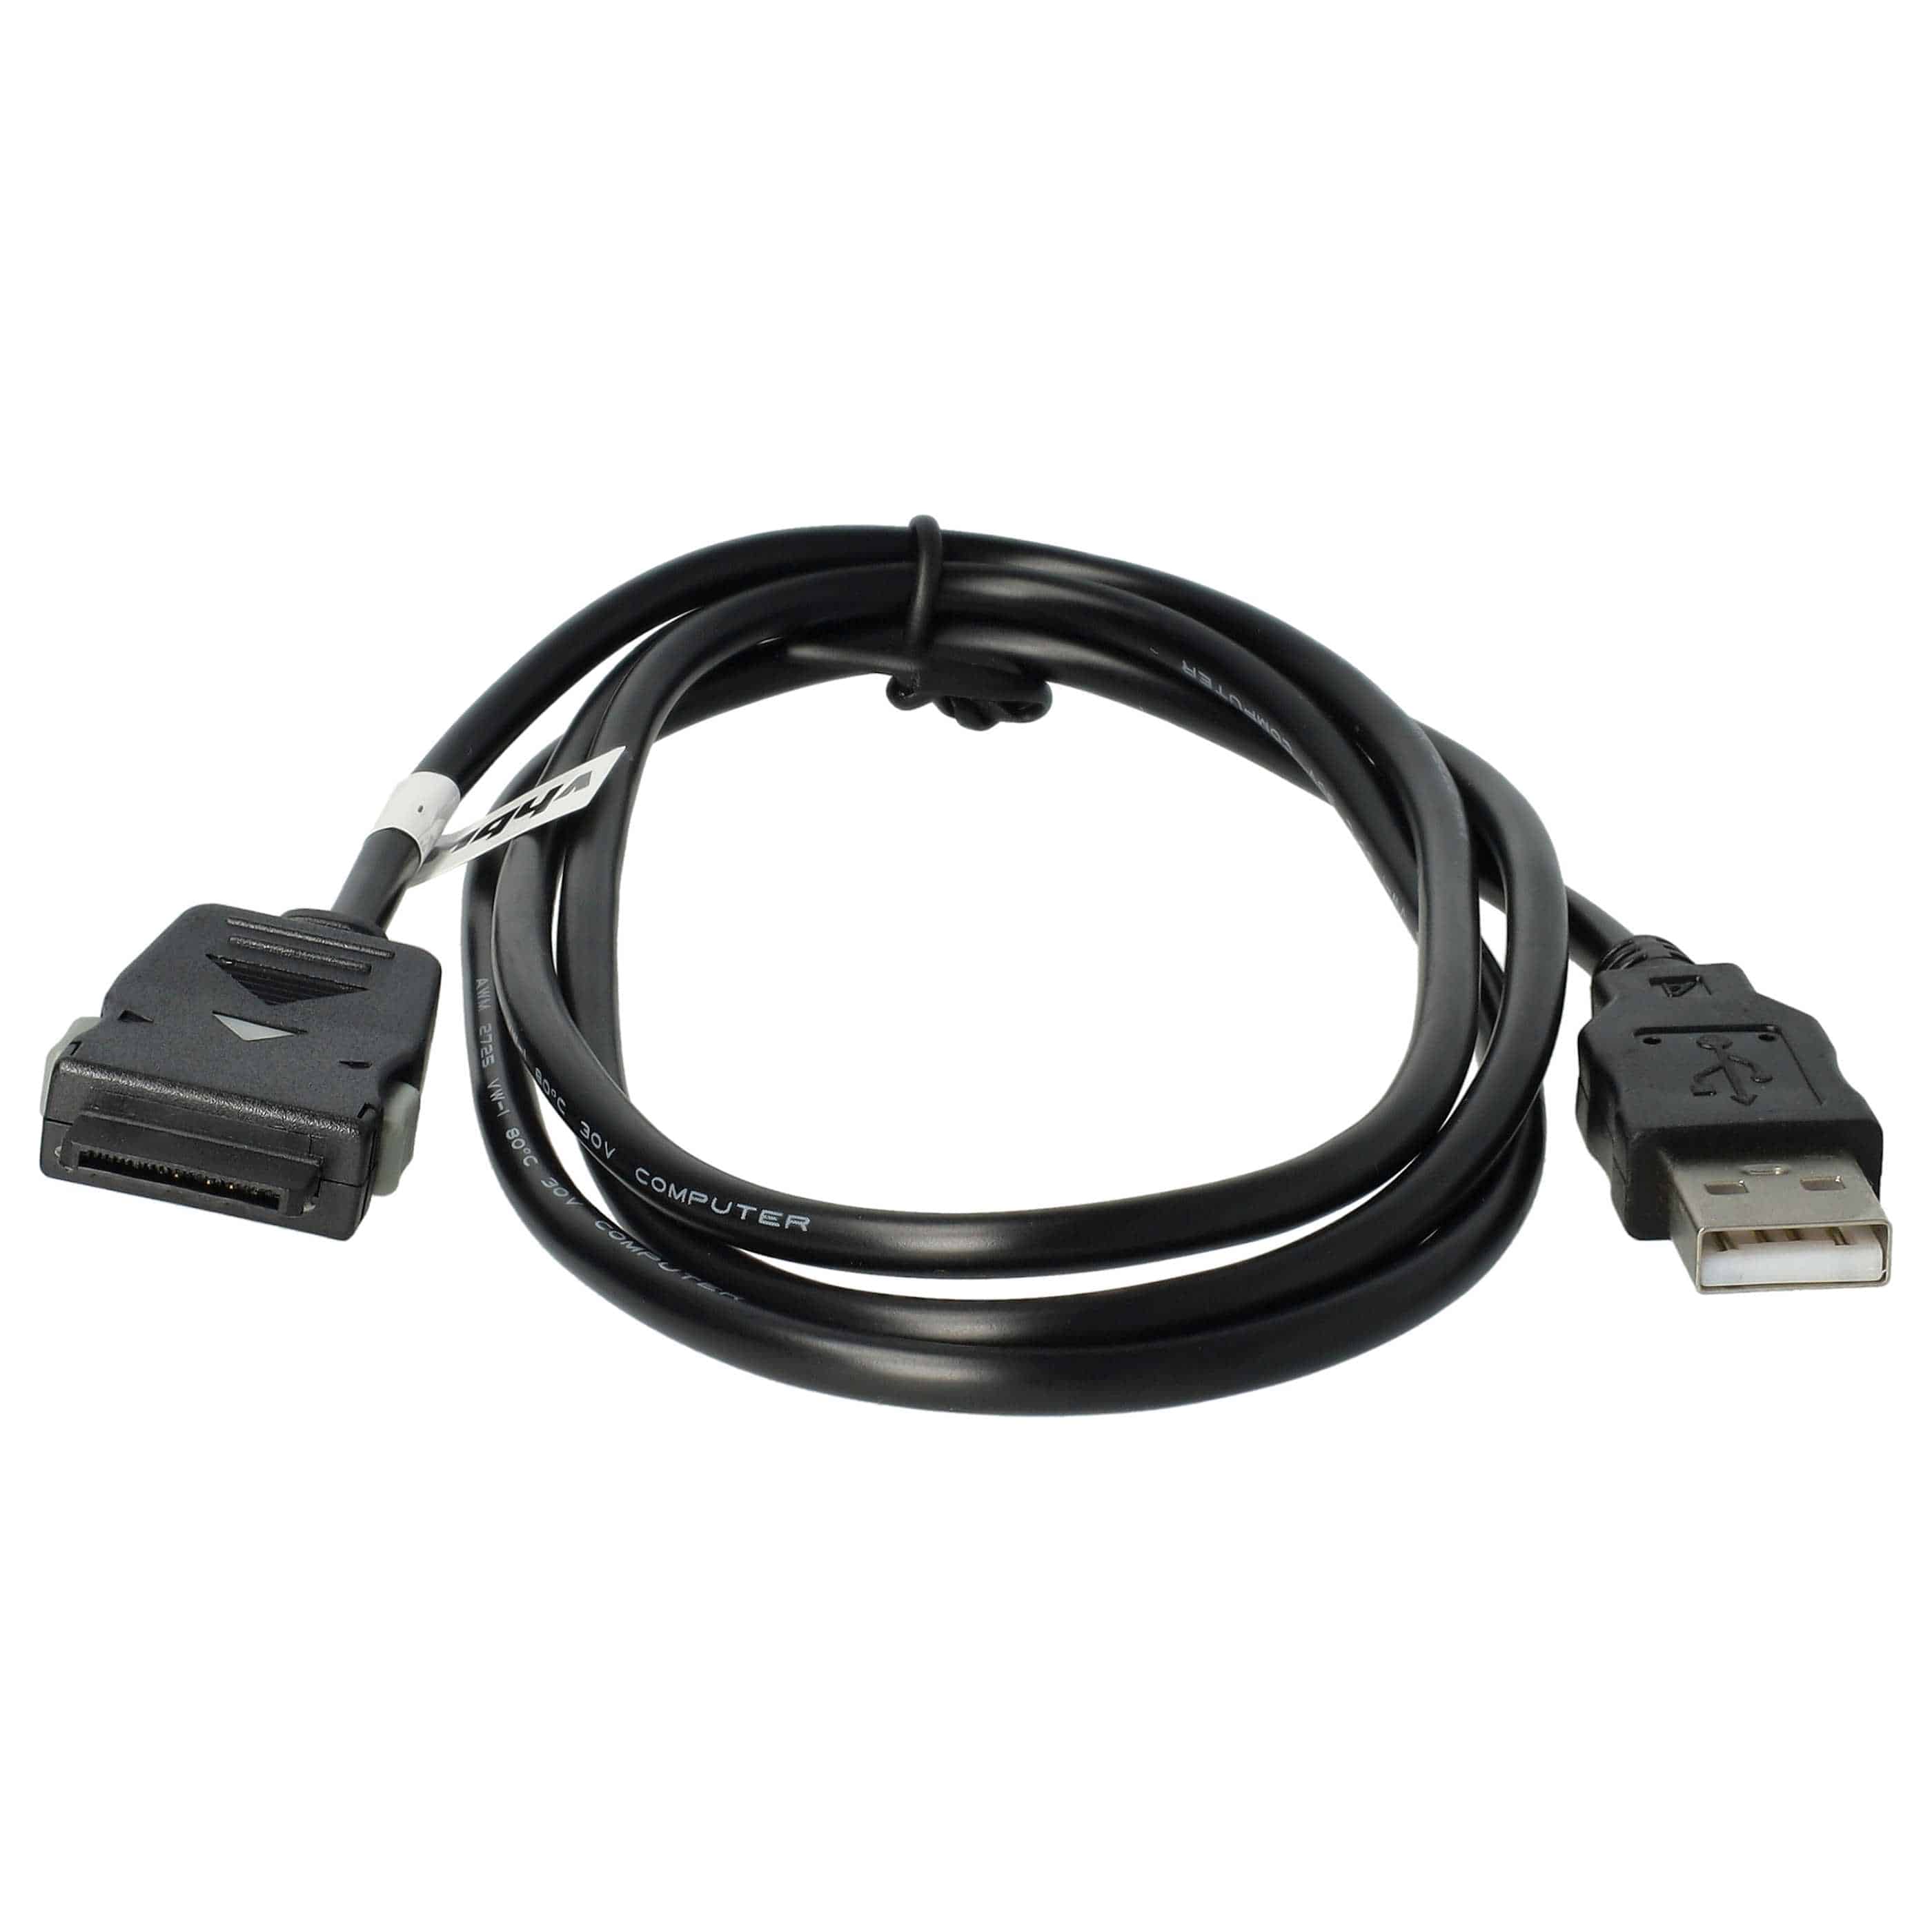 USB data cable suitable for SGH-Z140 Samsung SGH-Z140 phone, 100cm